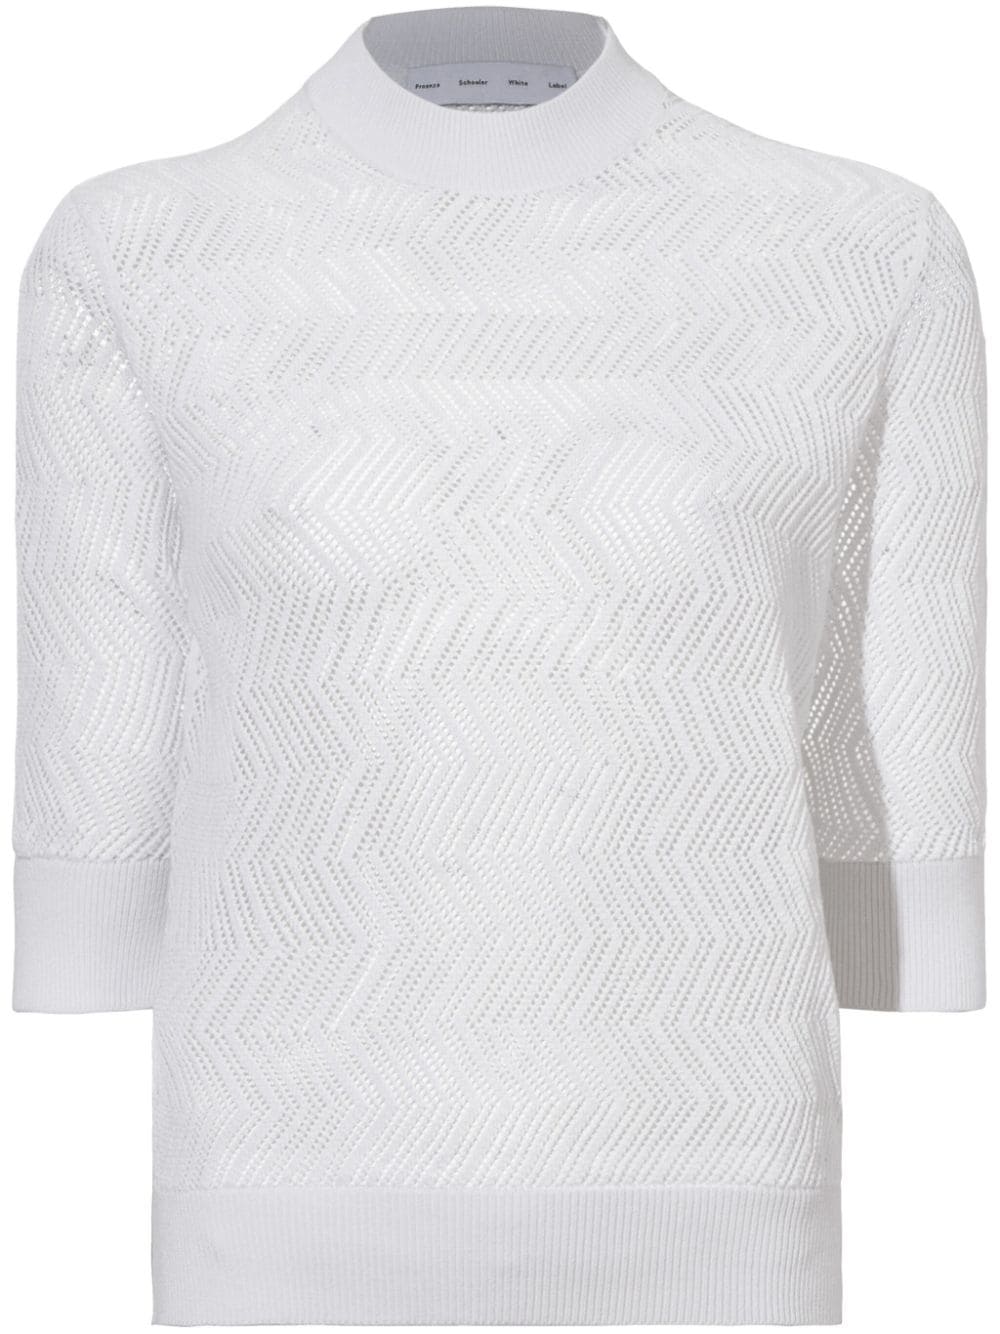 Image 1 of Proenza Schouler White Label Nicola pointelle-knit cotton top